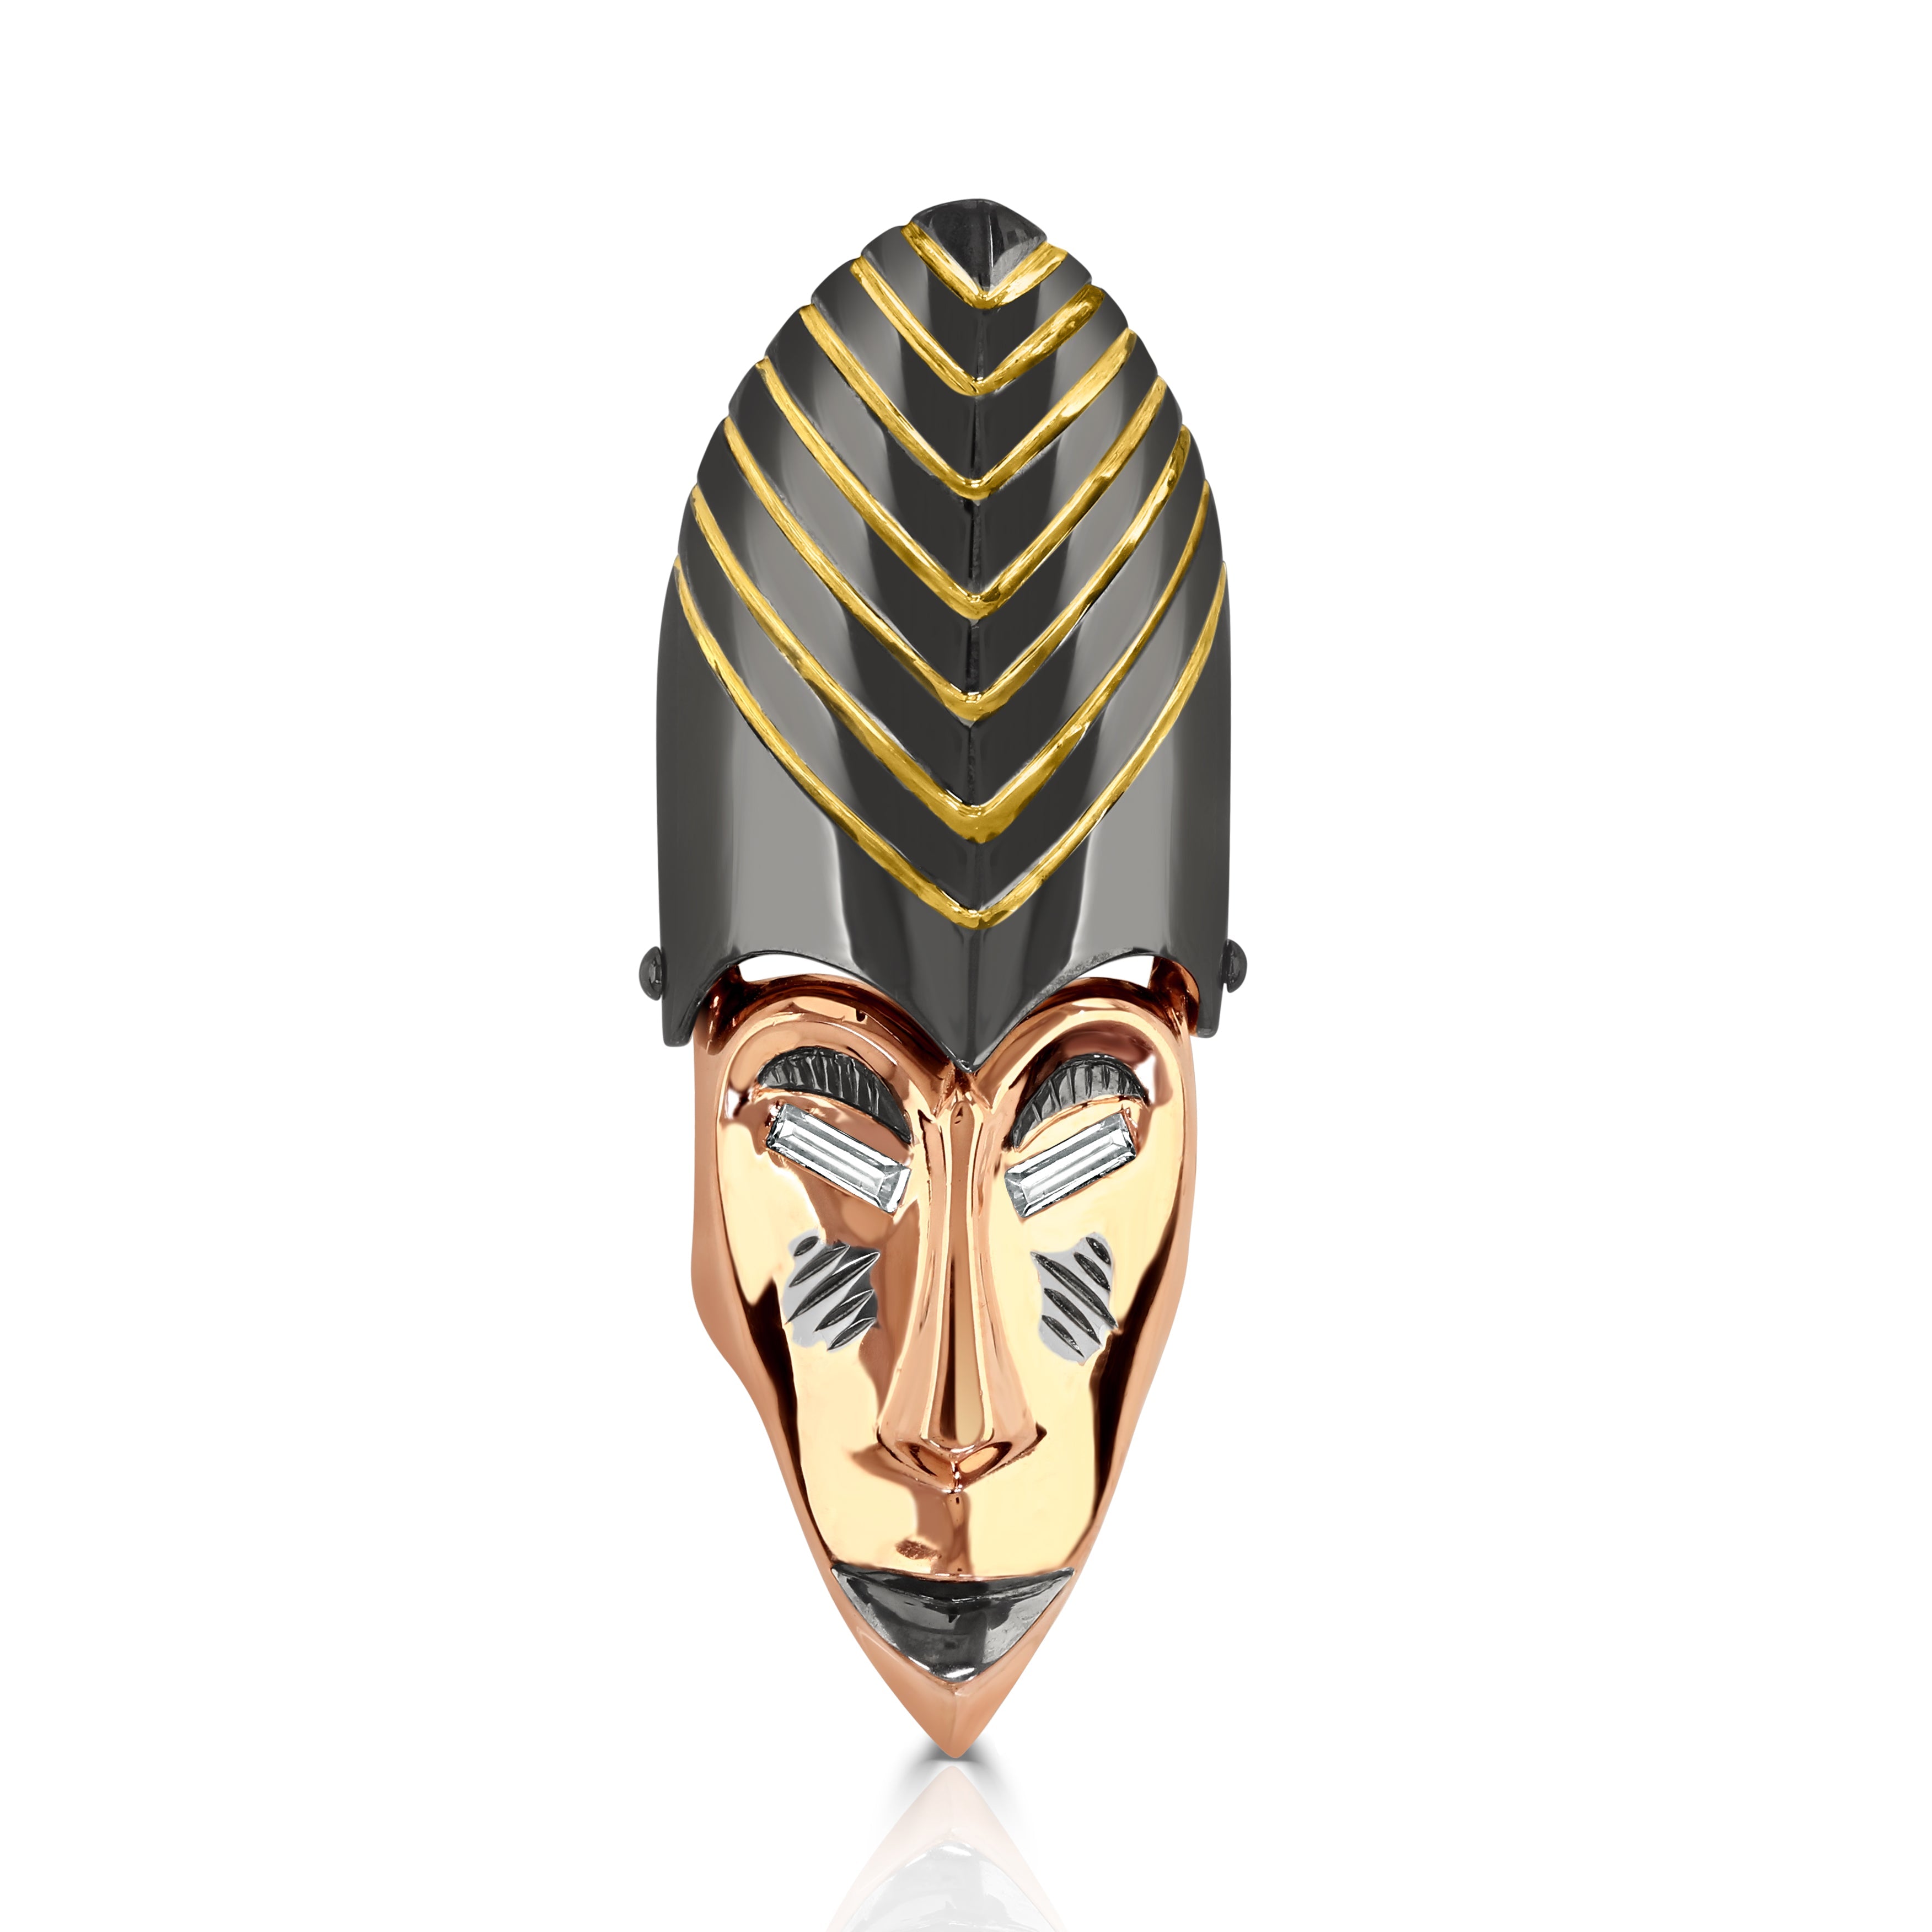 18ct gold Mask Ring (Hidden Queen Edition)